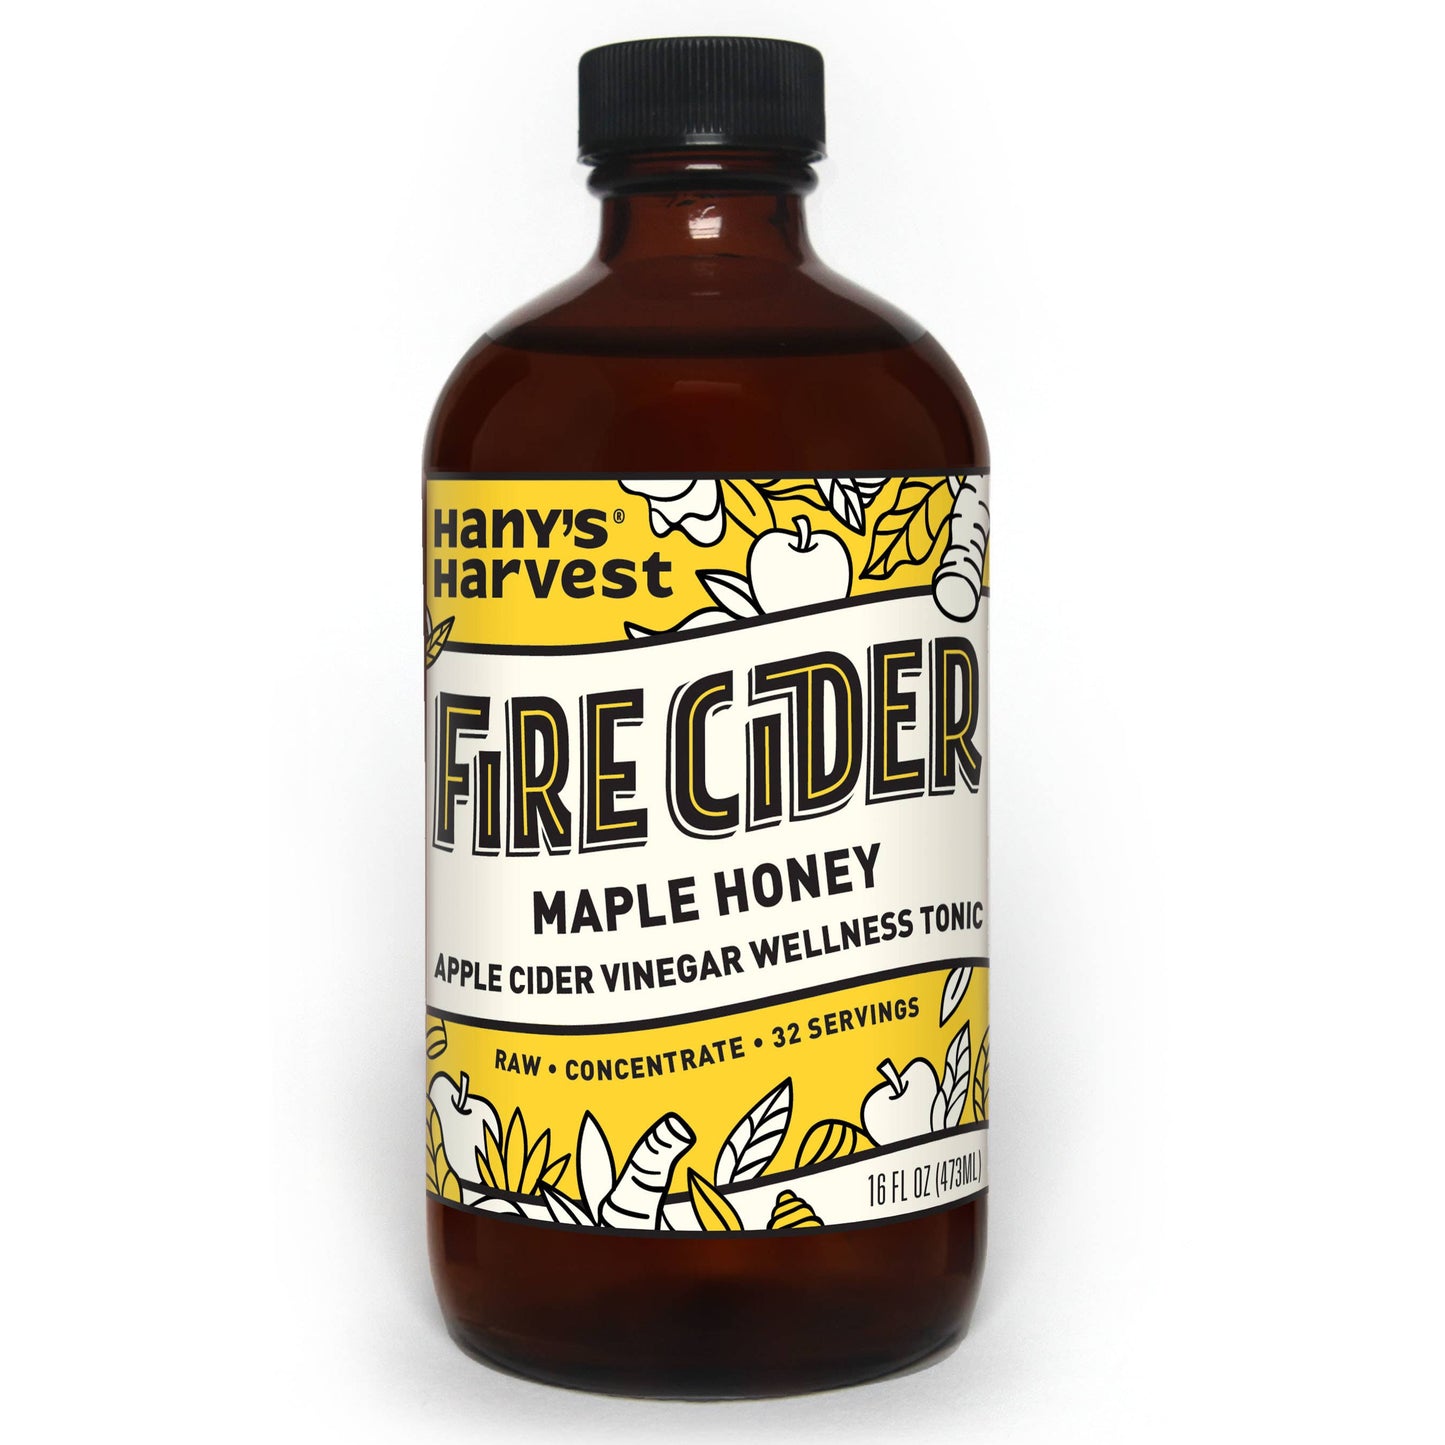 Maple Honey Fire Cider